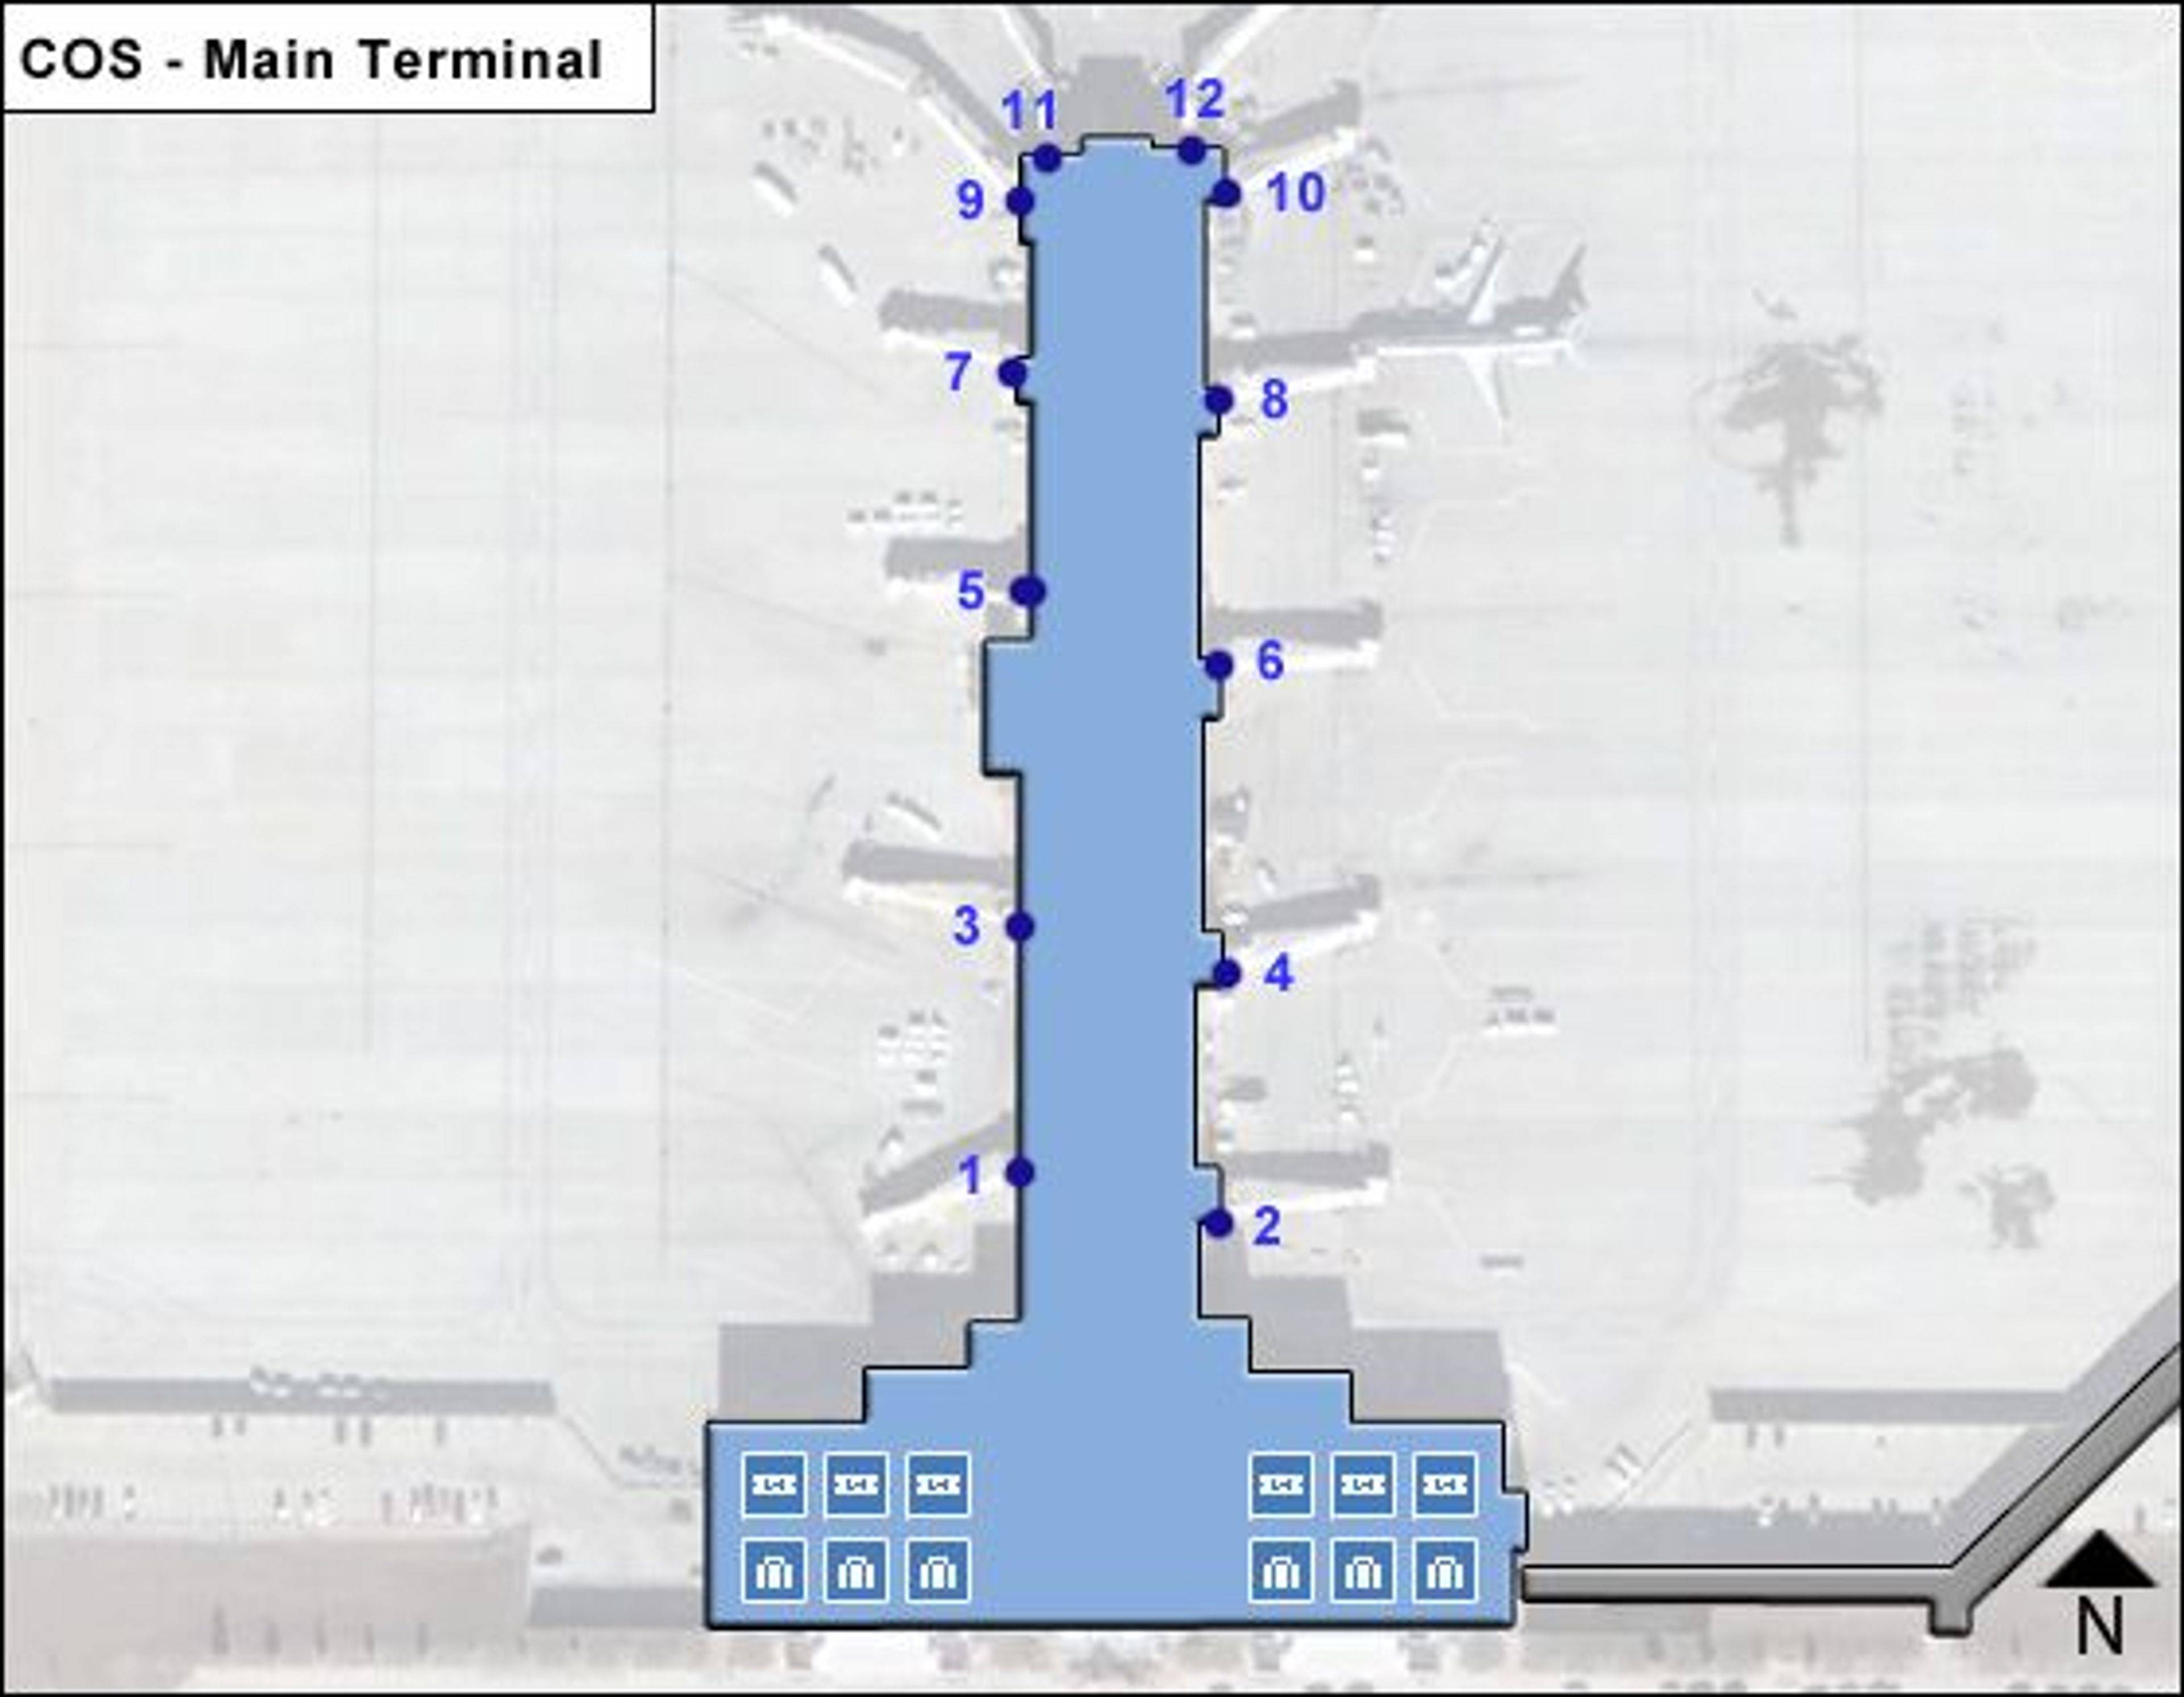 Colorado Springs Airport Main Terminal Map